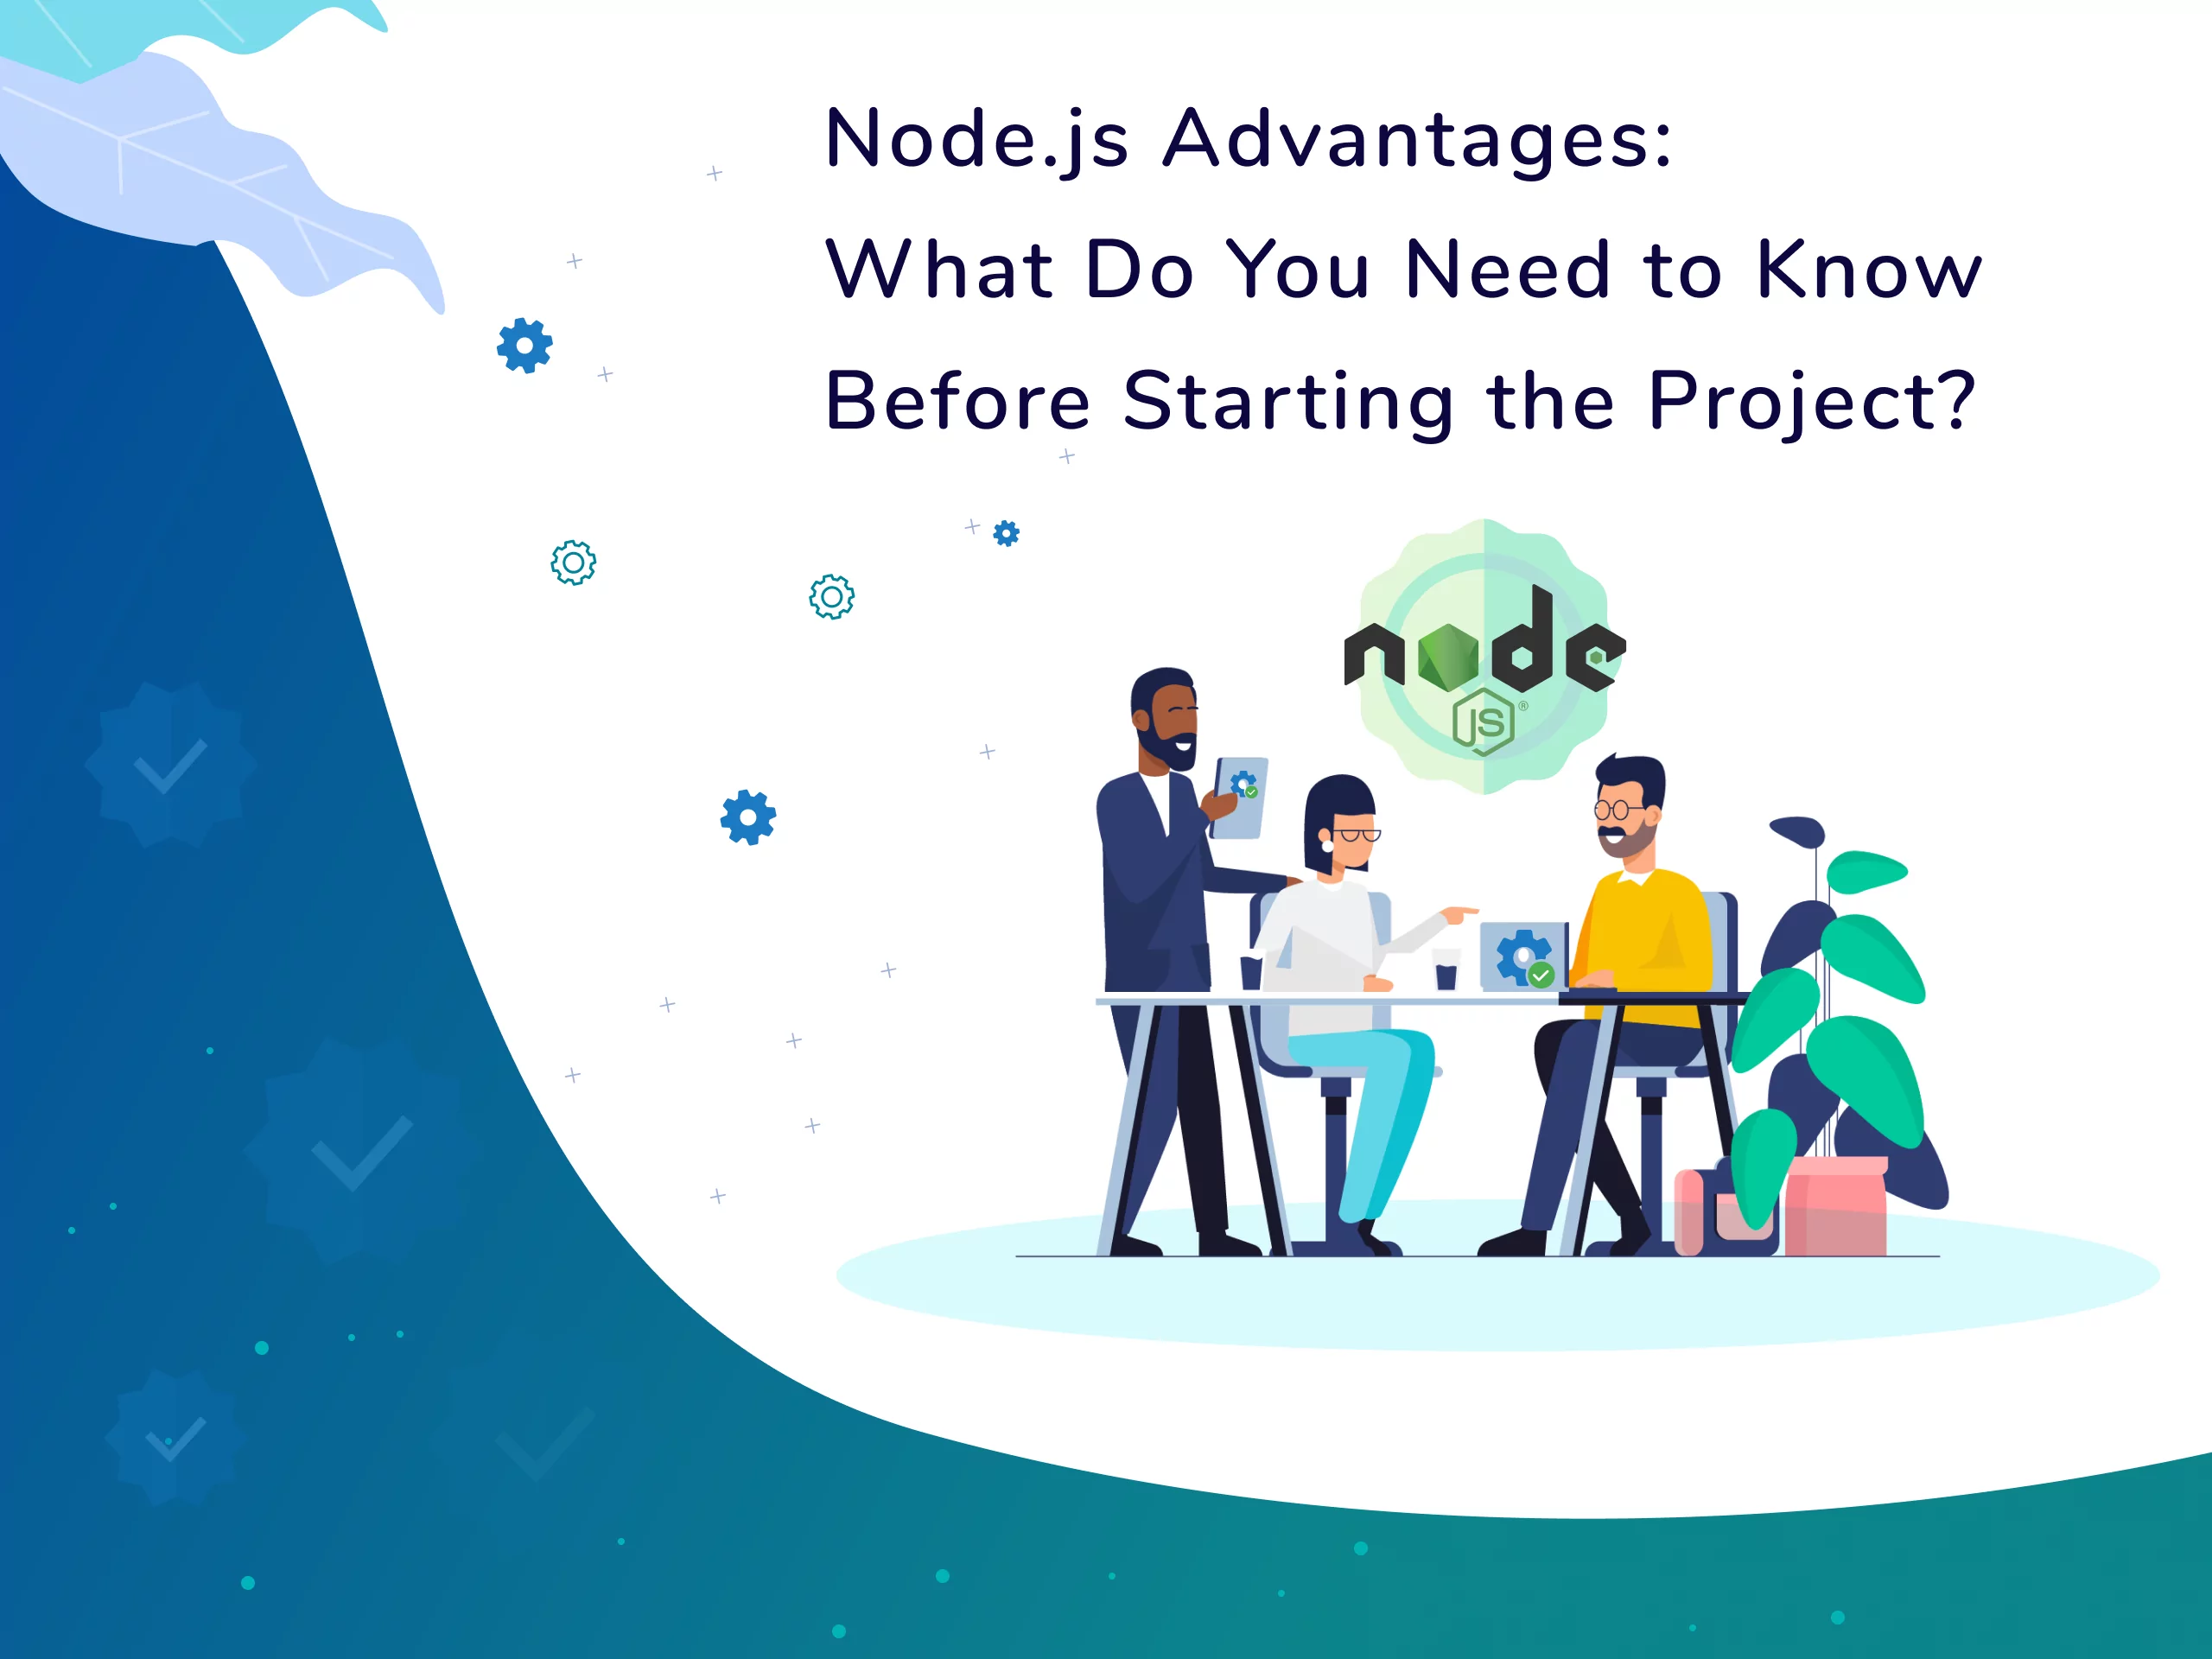 Developers are choosing NodeJS